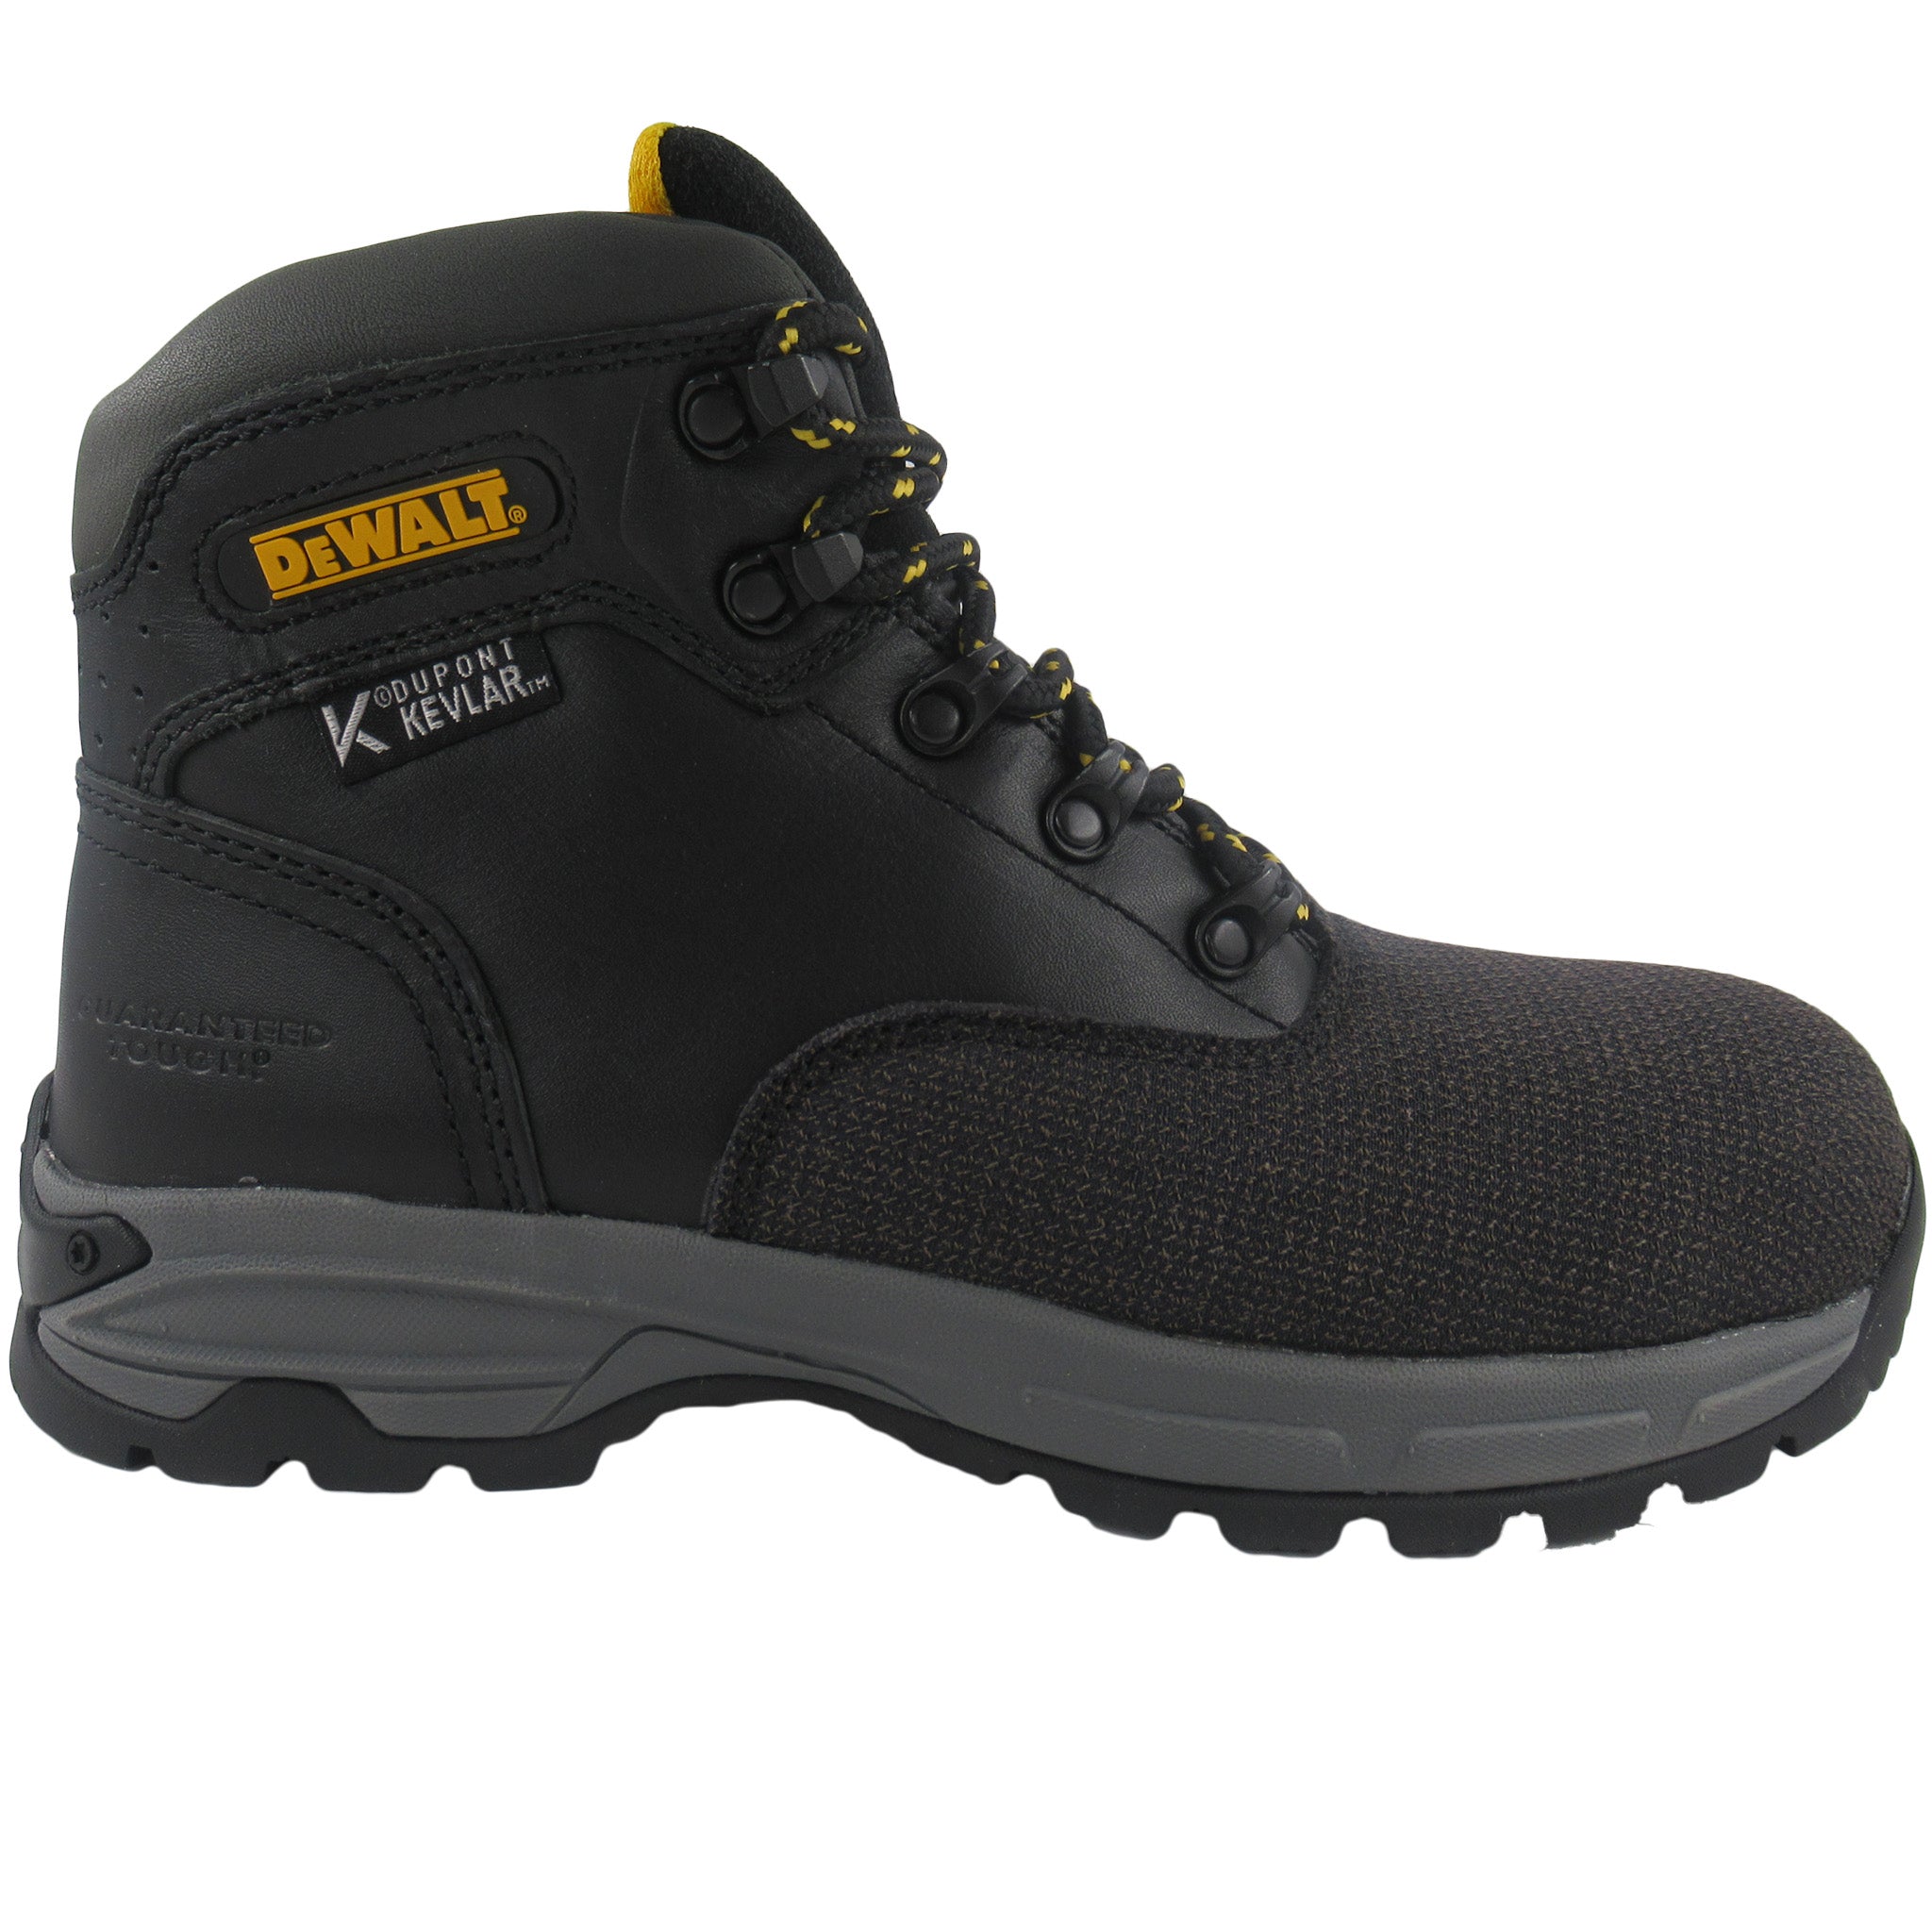 DEWALT Men's DXWP10039 Newman Plus Kevlar Steel Work Boots That Shoe Store More